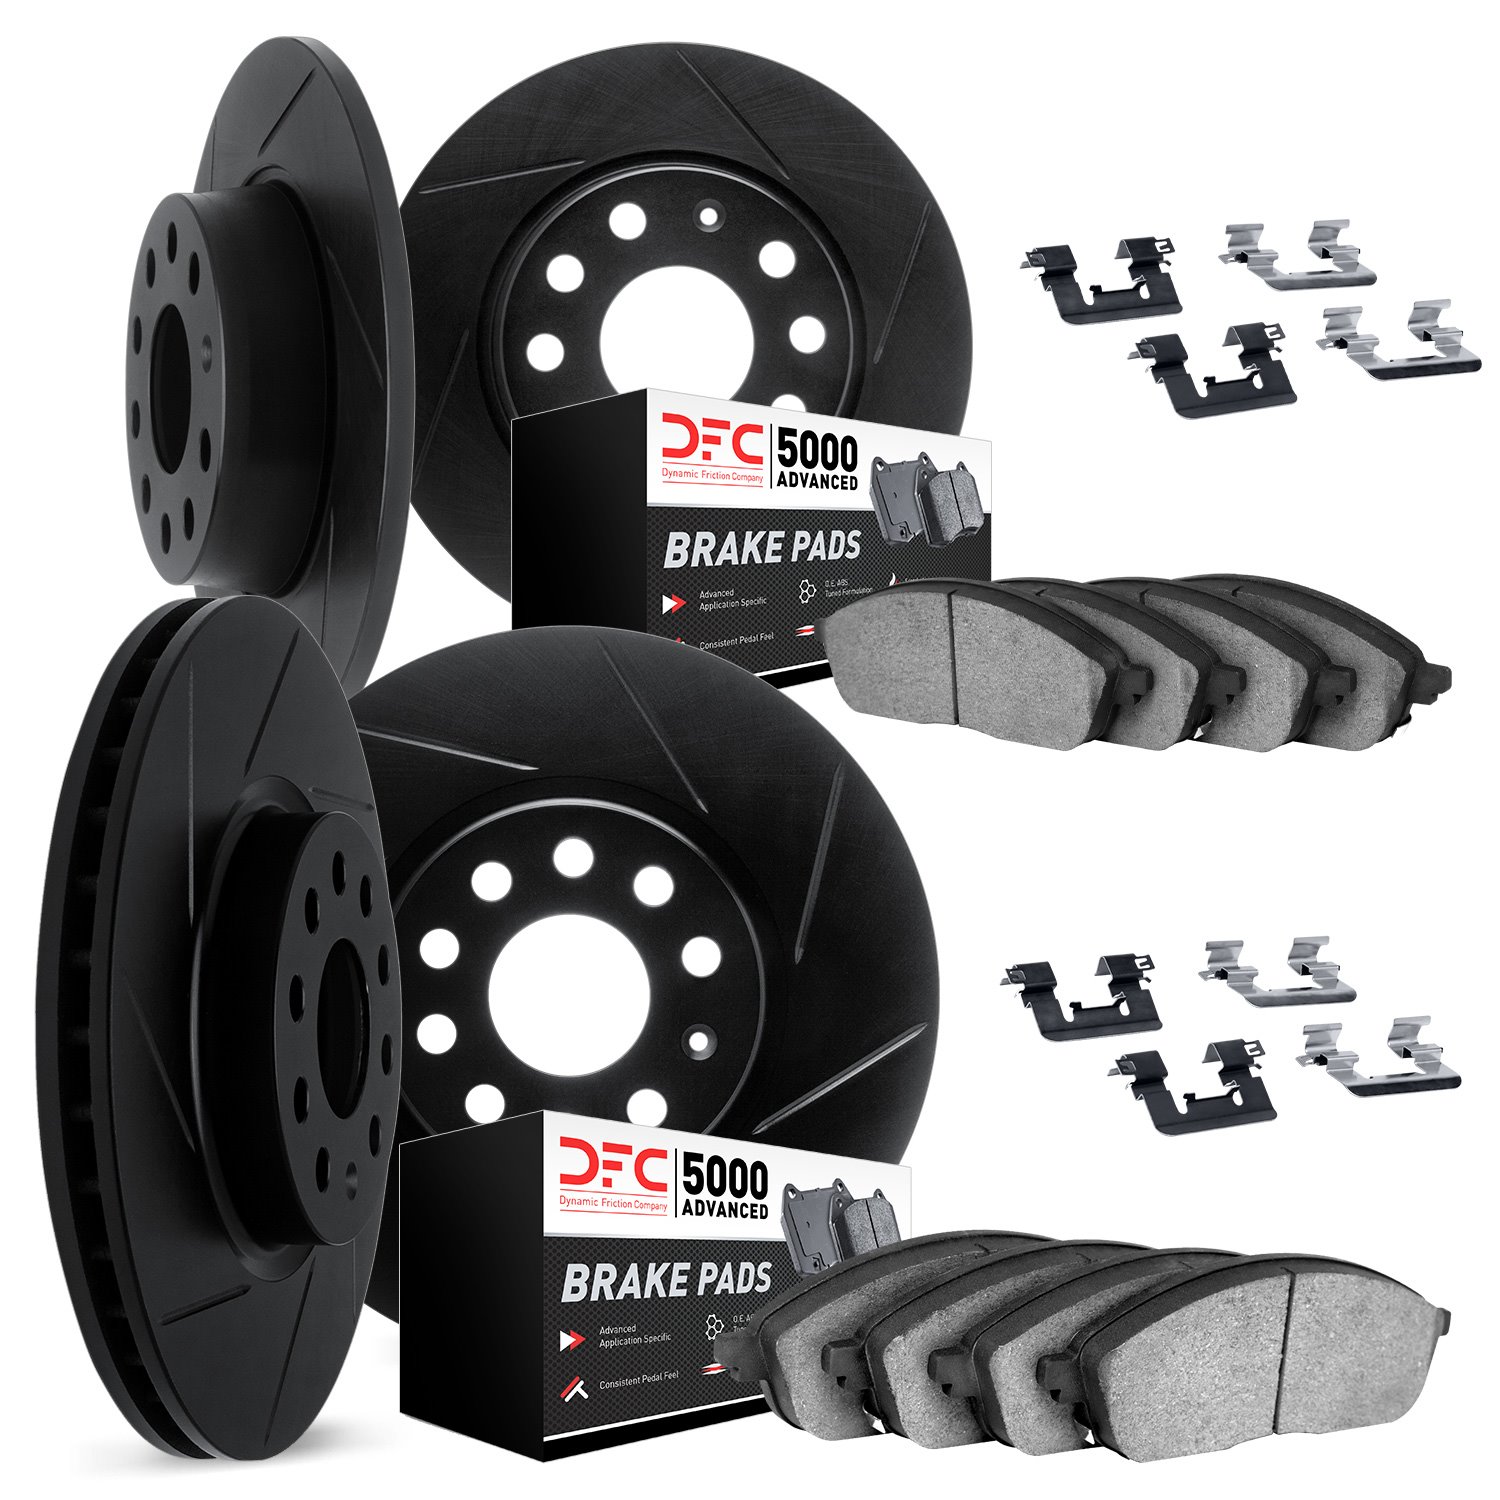 3514-42006 Slotted Brake Rotors w/5000 Advanced Brake Pads Kit & Hardware [Black], 1999-2004 Mopar, Position: Front and Rear